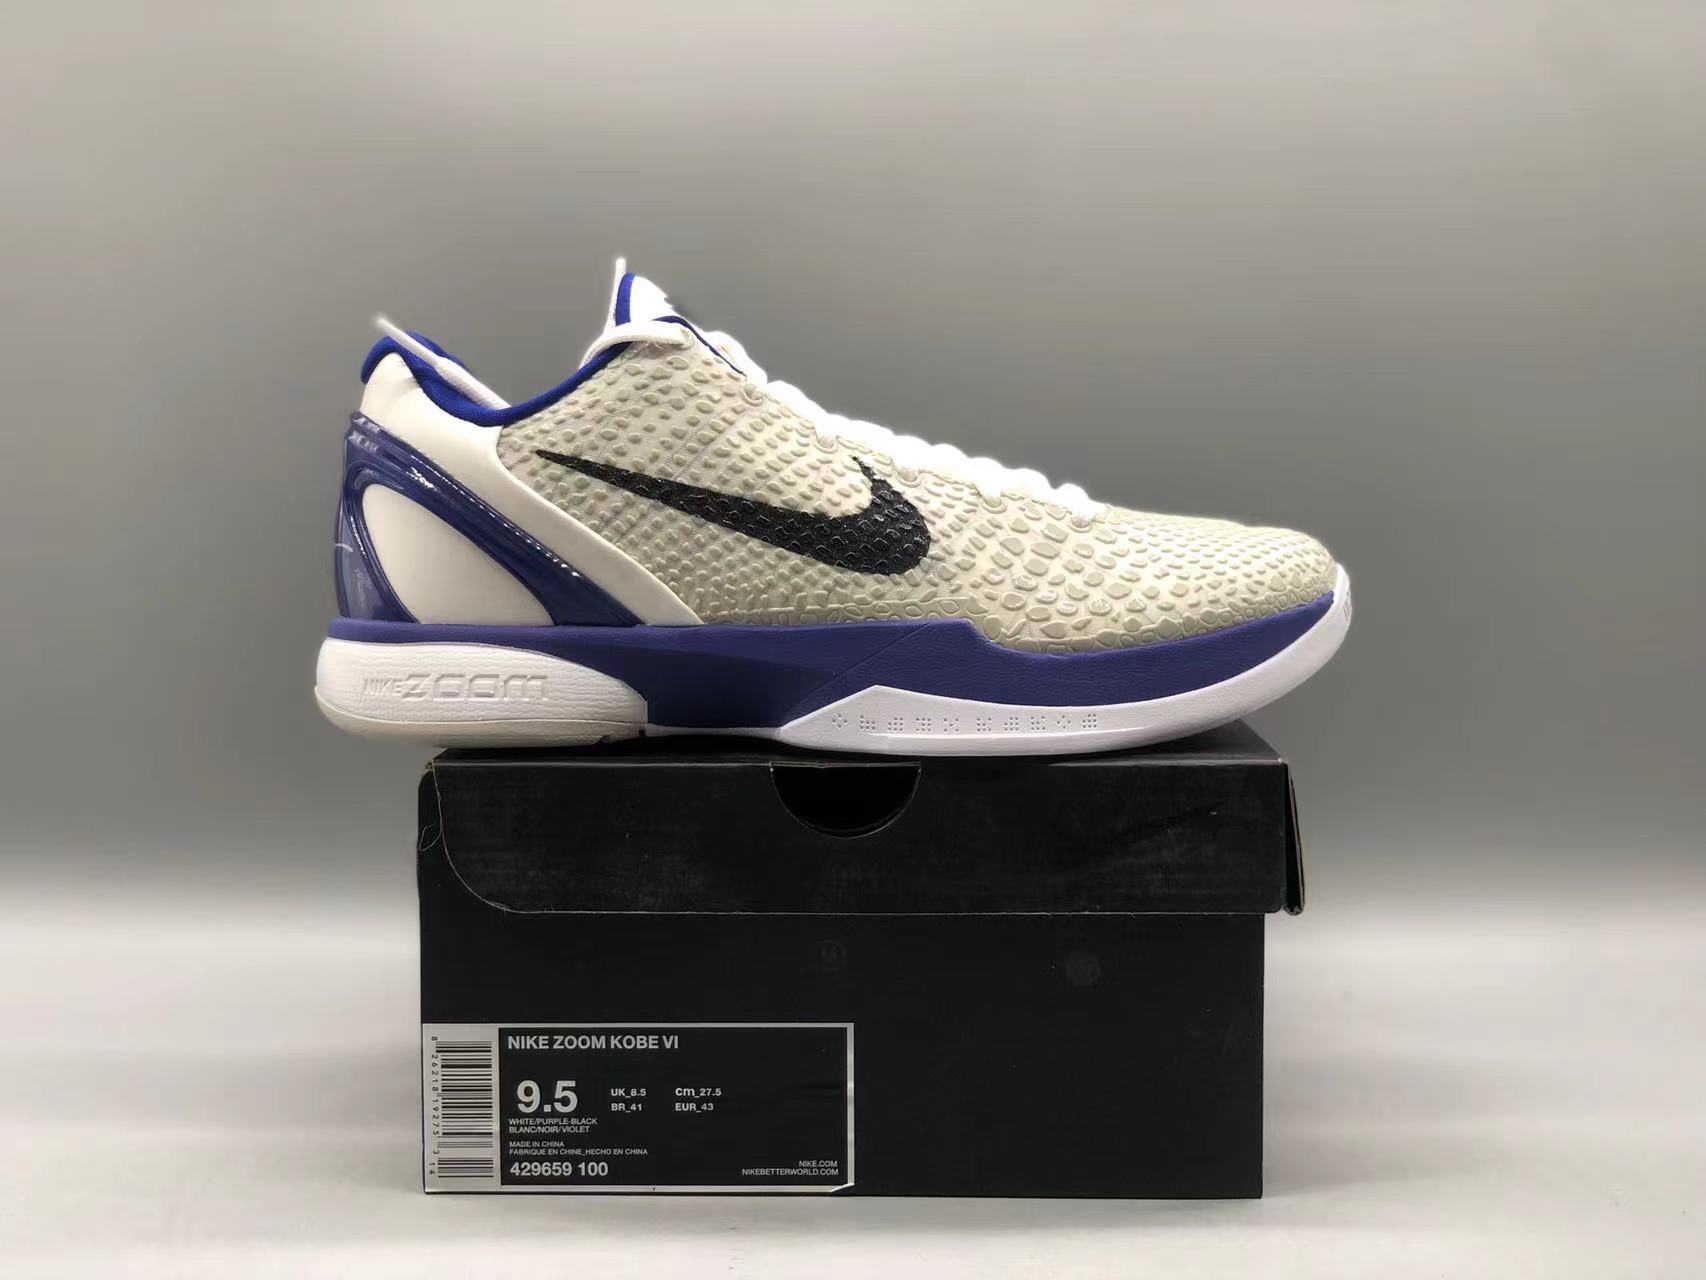 Nike Zoom Kobe 6 Concord 429659 100 Size: 40-48.5